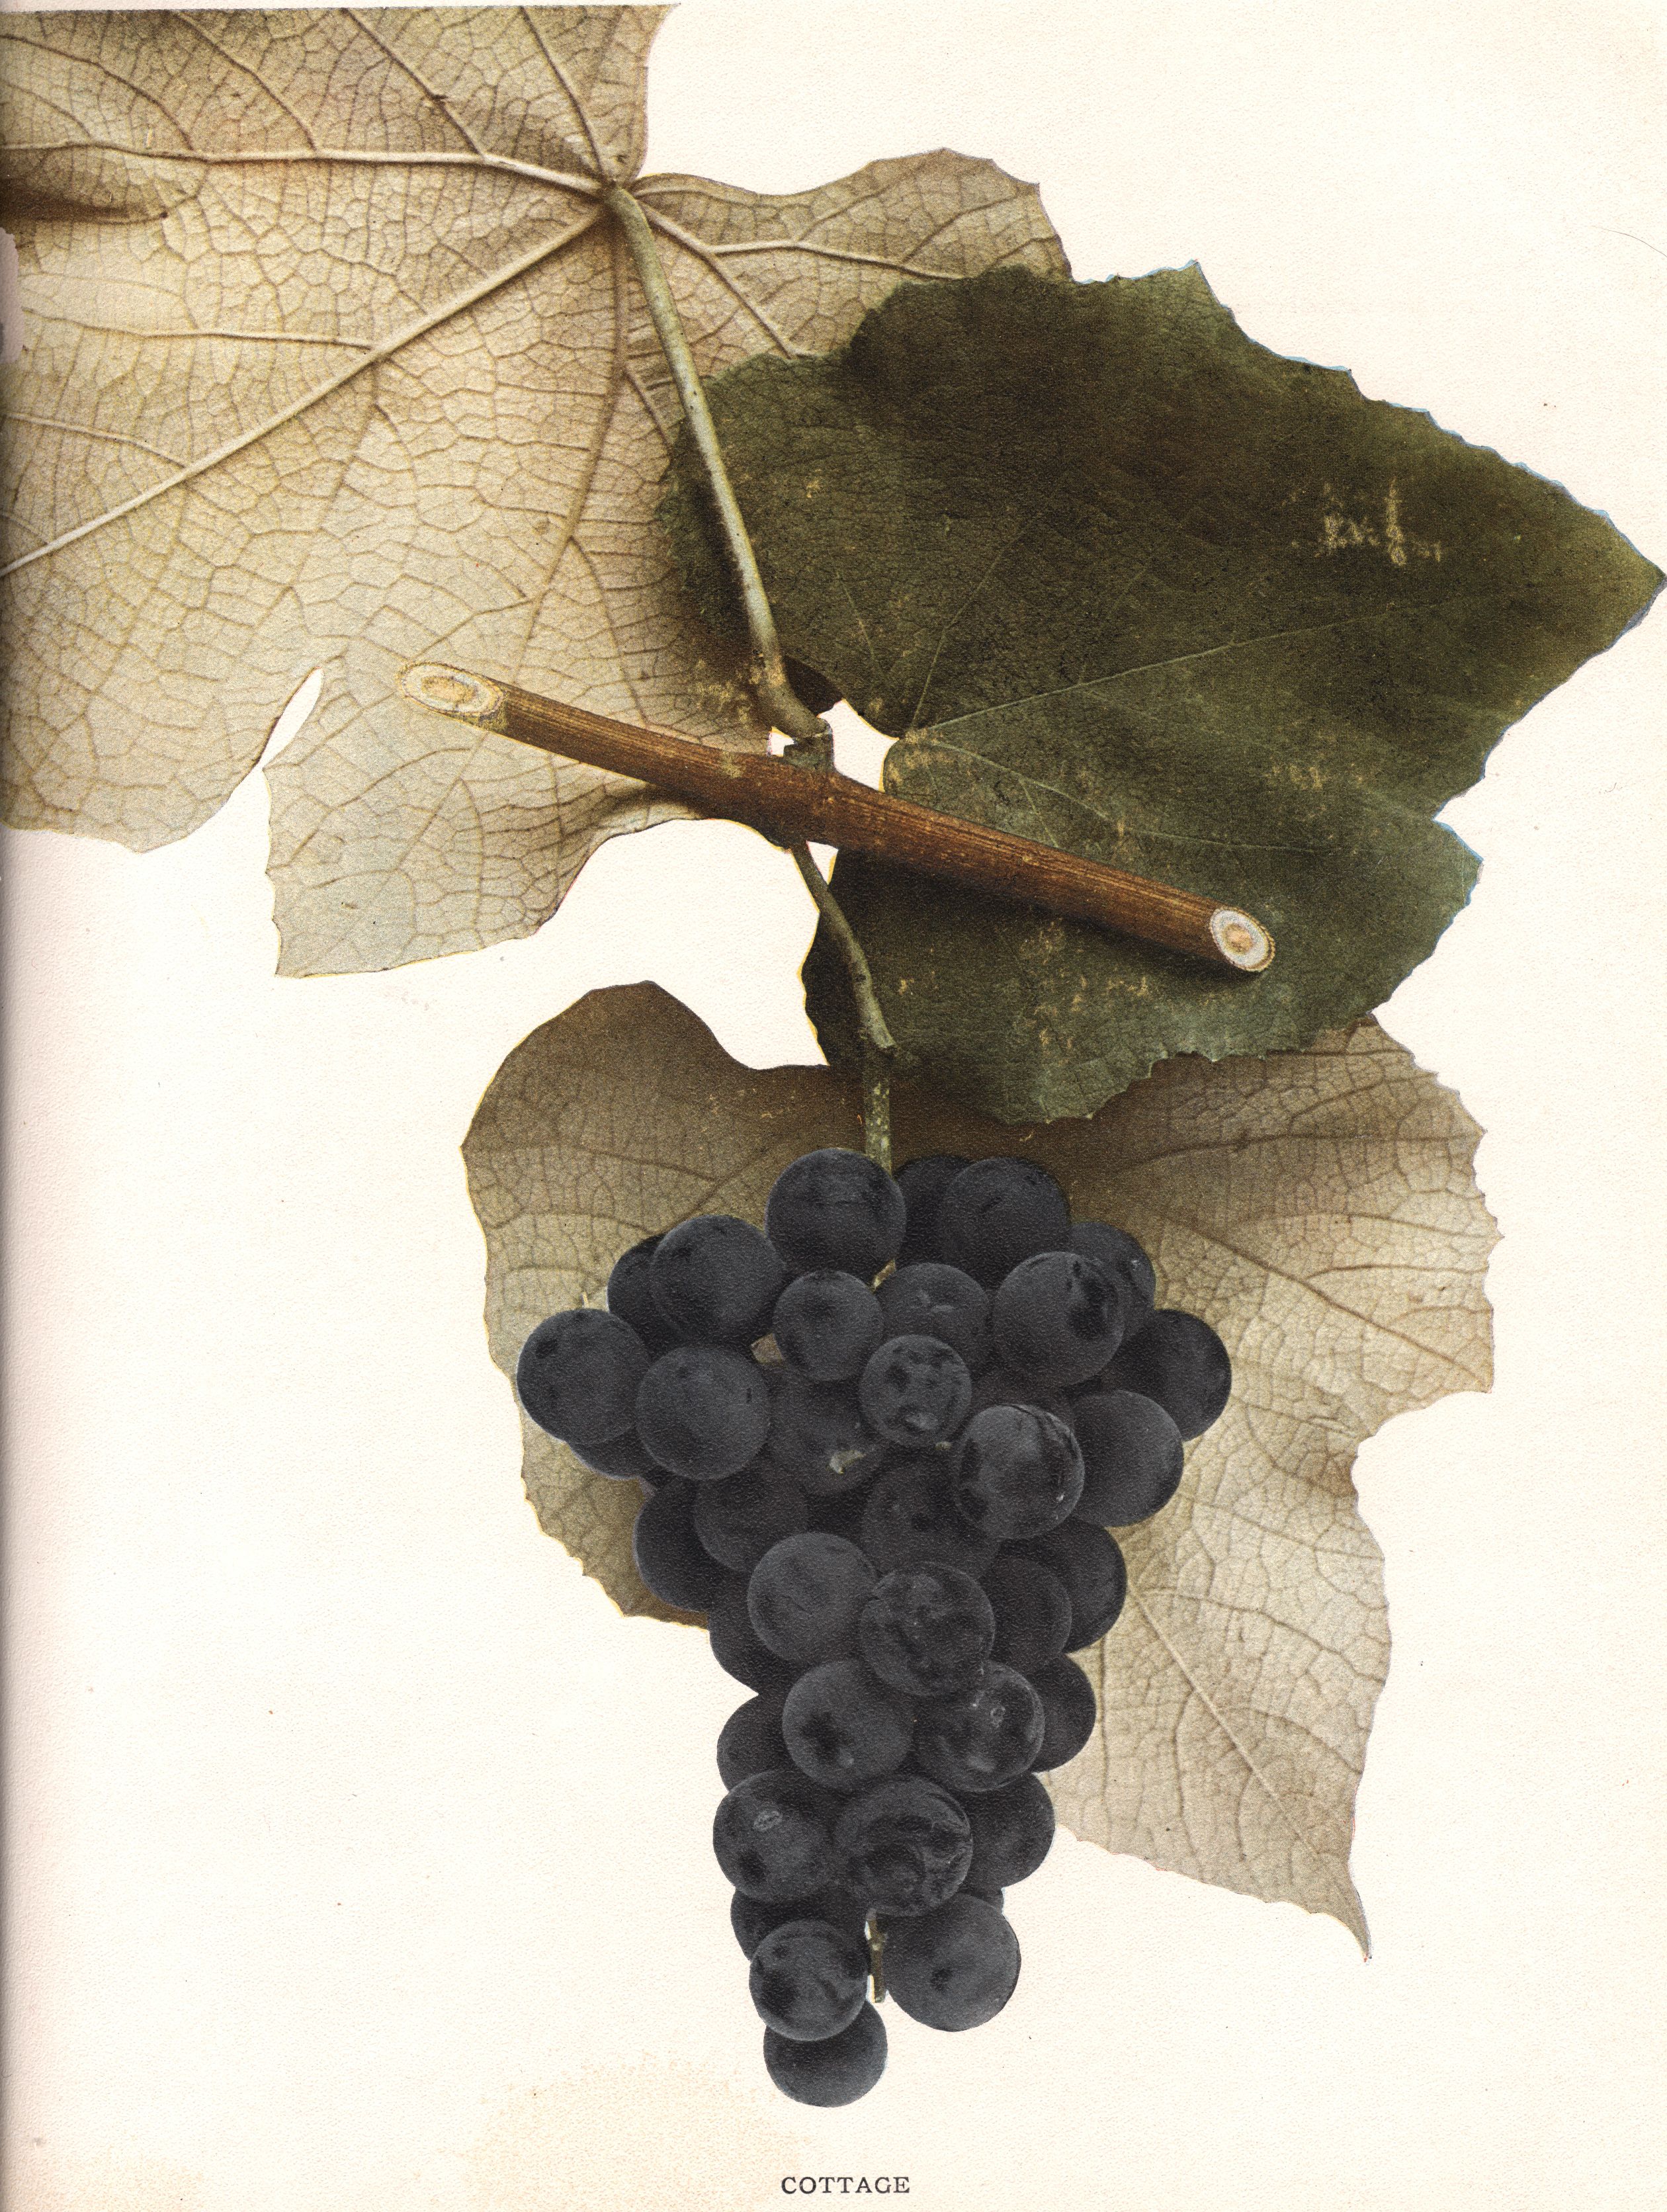 is hope grape a vigorous grower